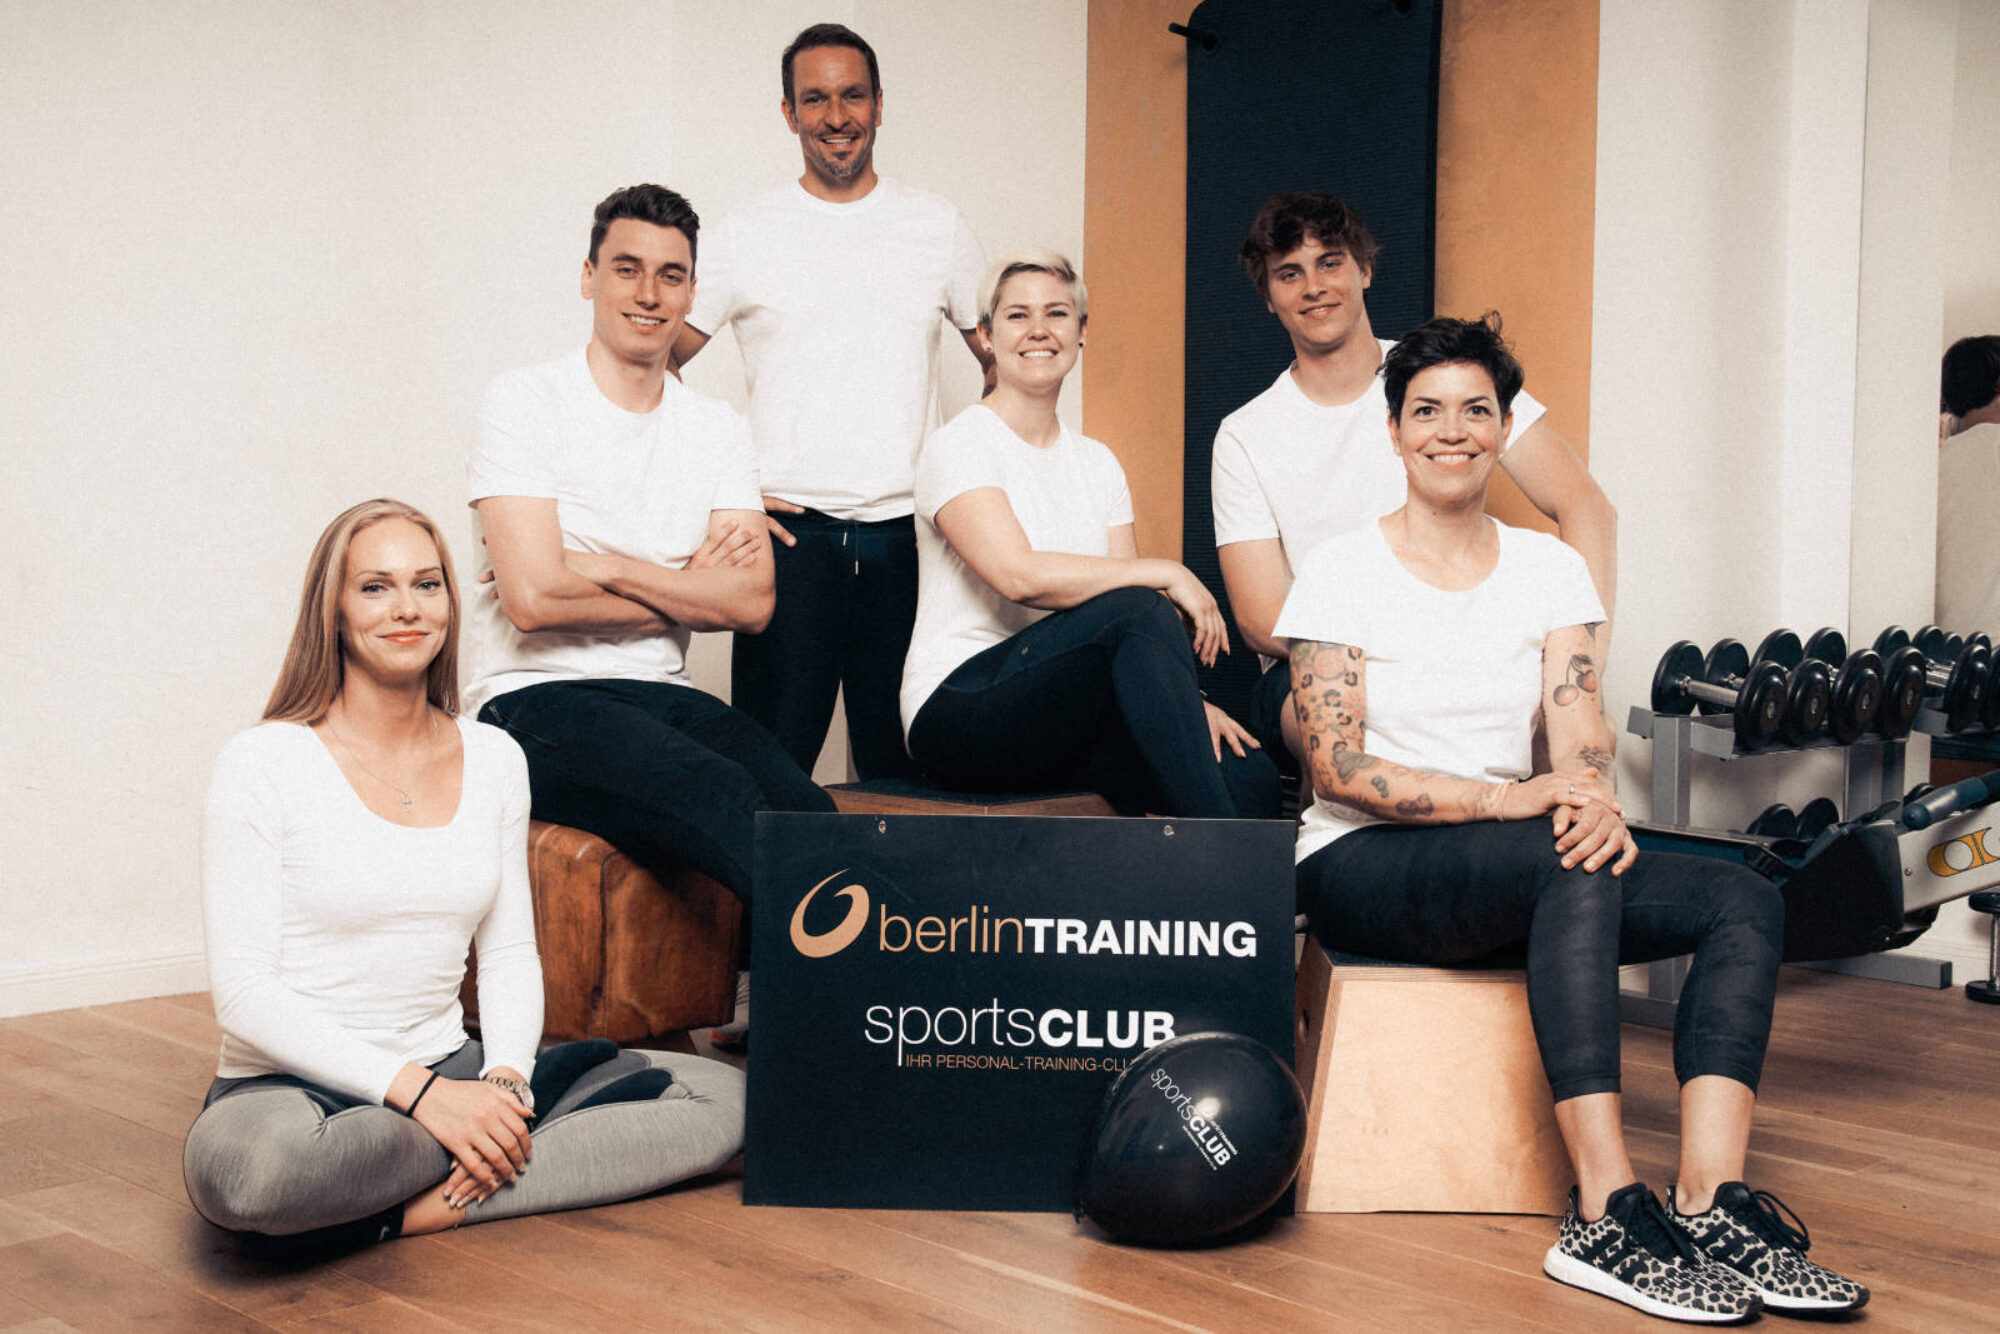 berlinTRAINING | Ihr Personal Training Club in Berlin